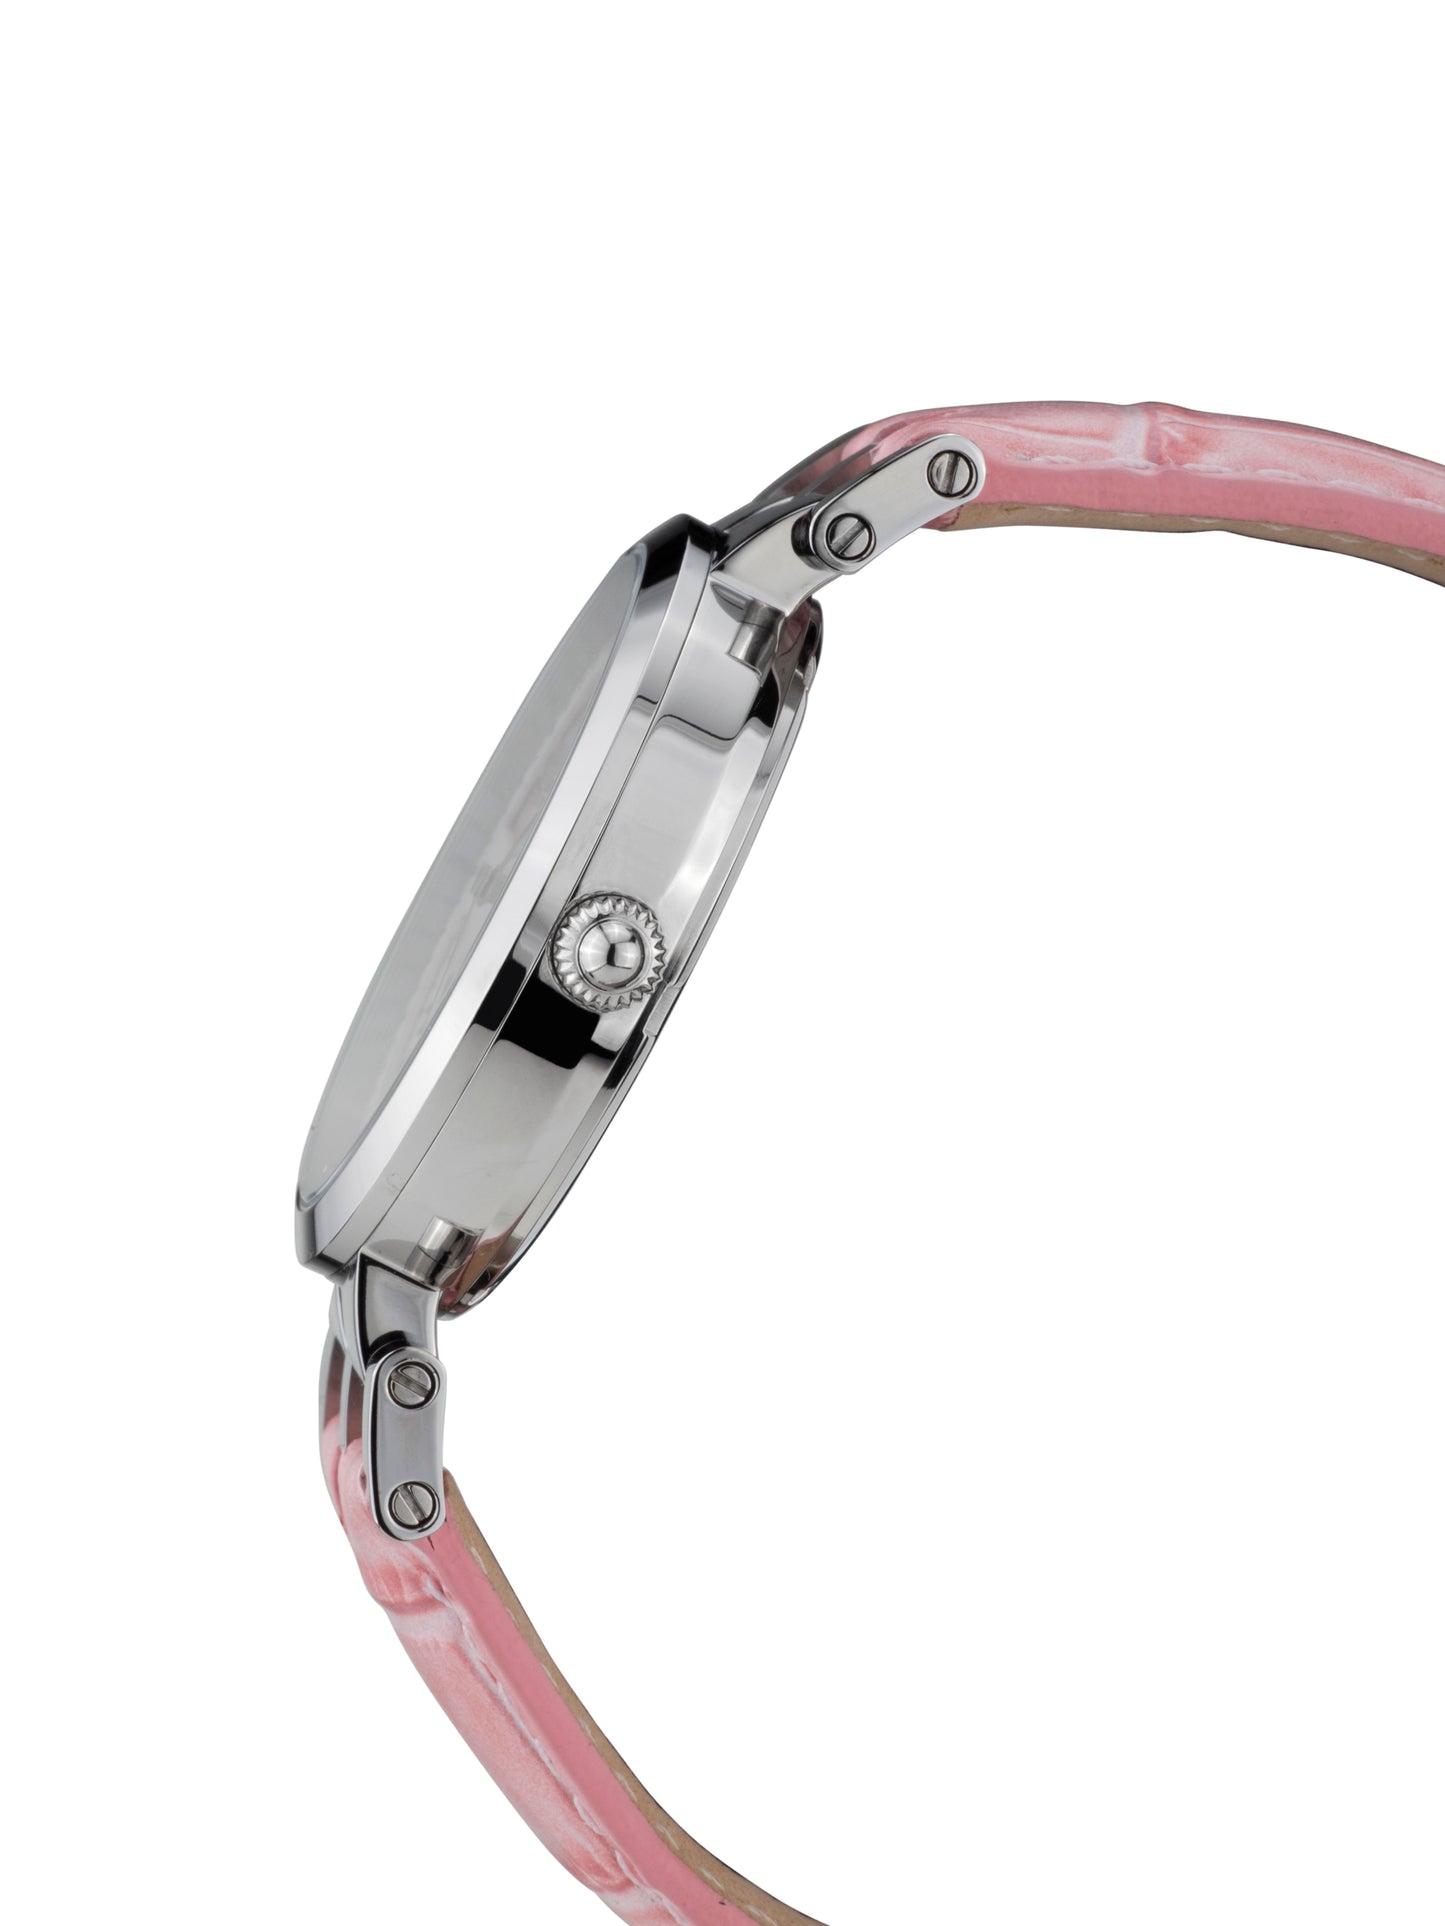 Automatic watches — Feronia — Chrono Diamond — steel pink